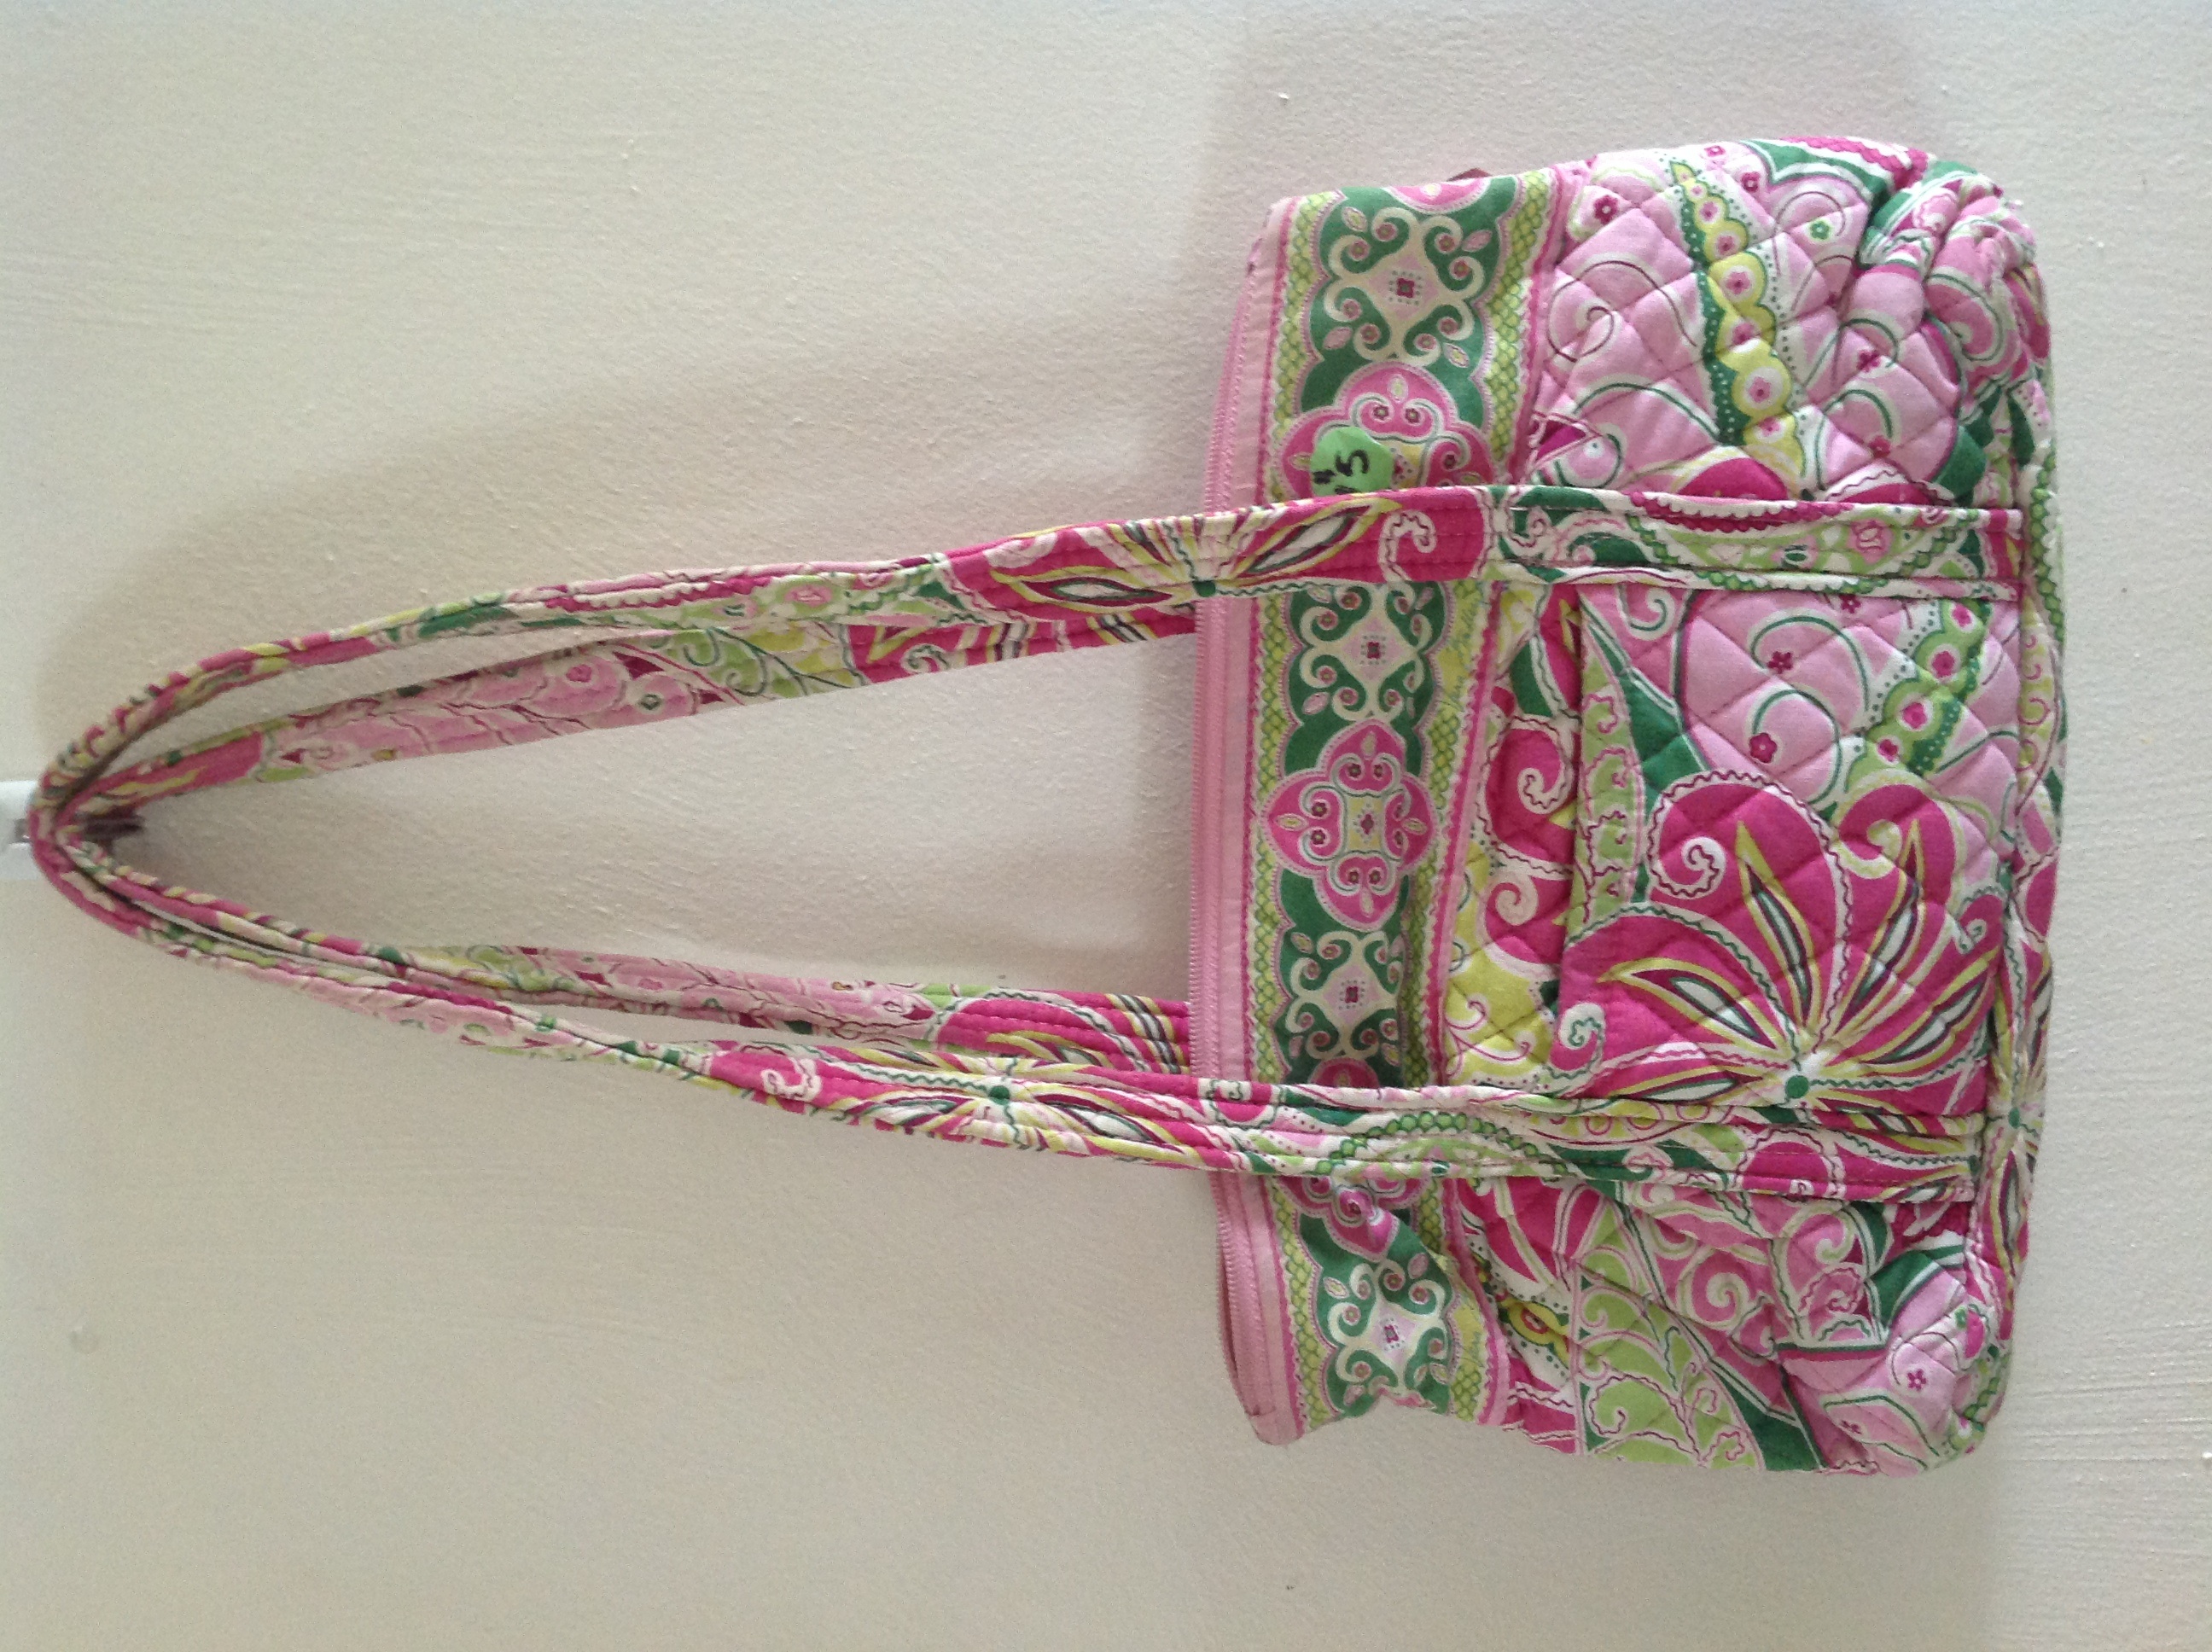 Pink and green Vera Bradley purse.